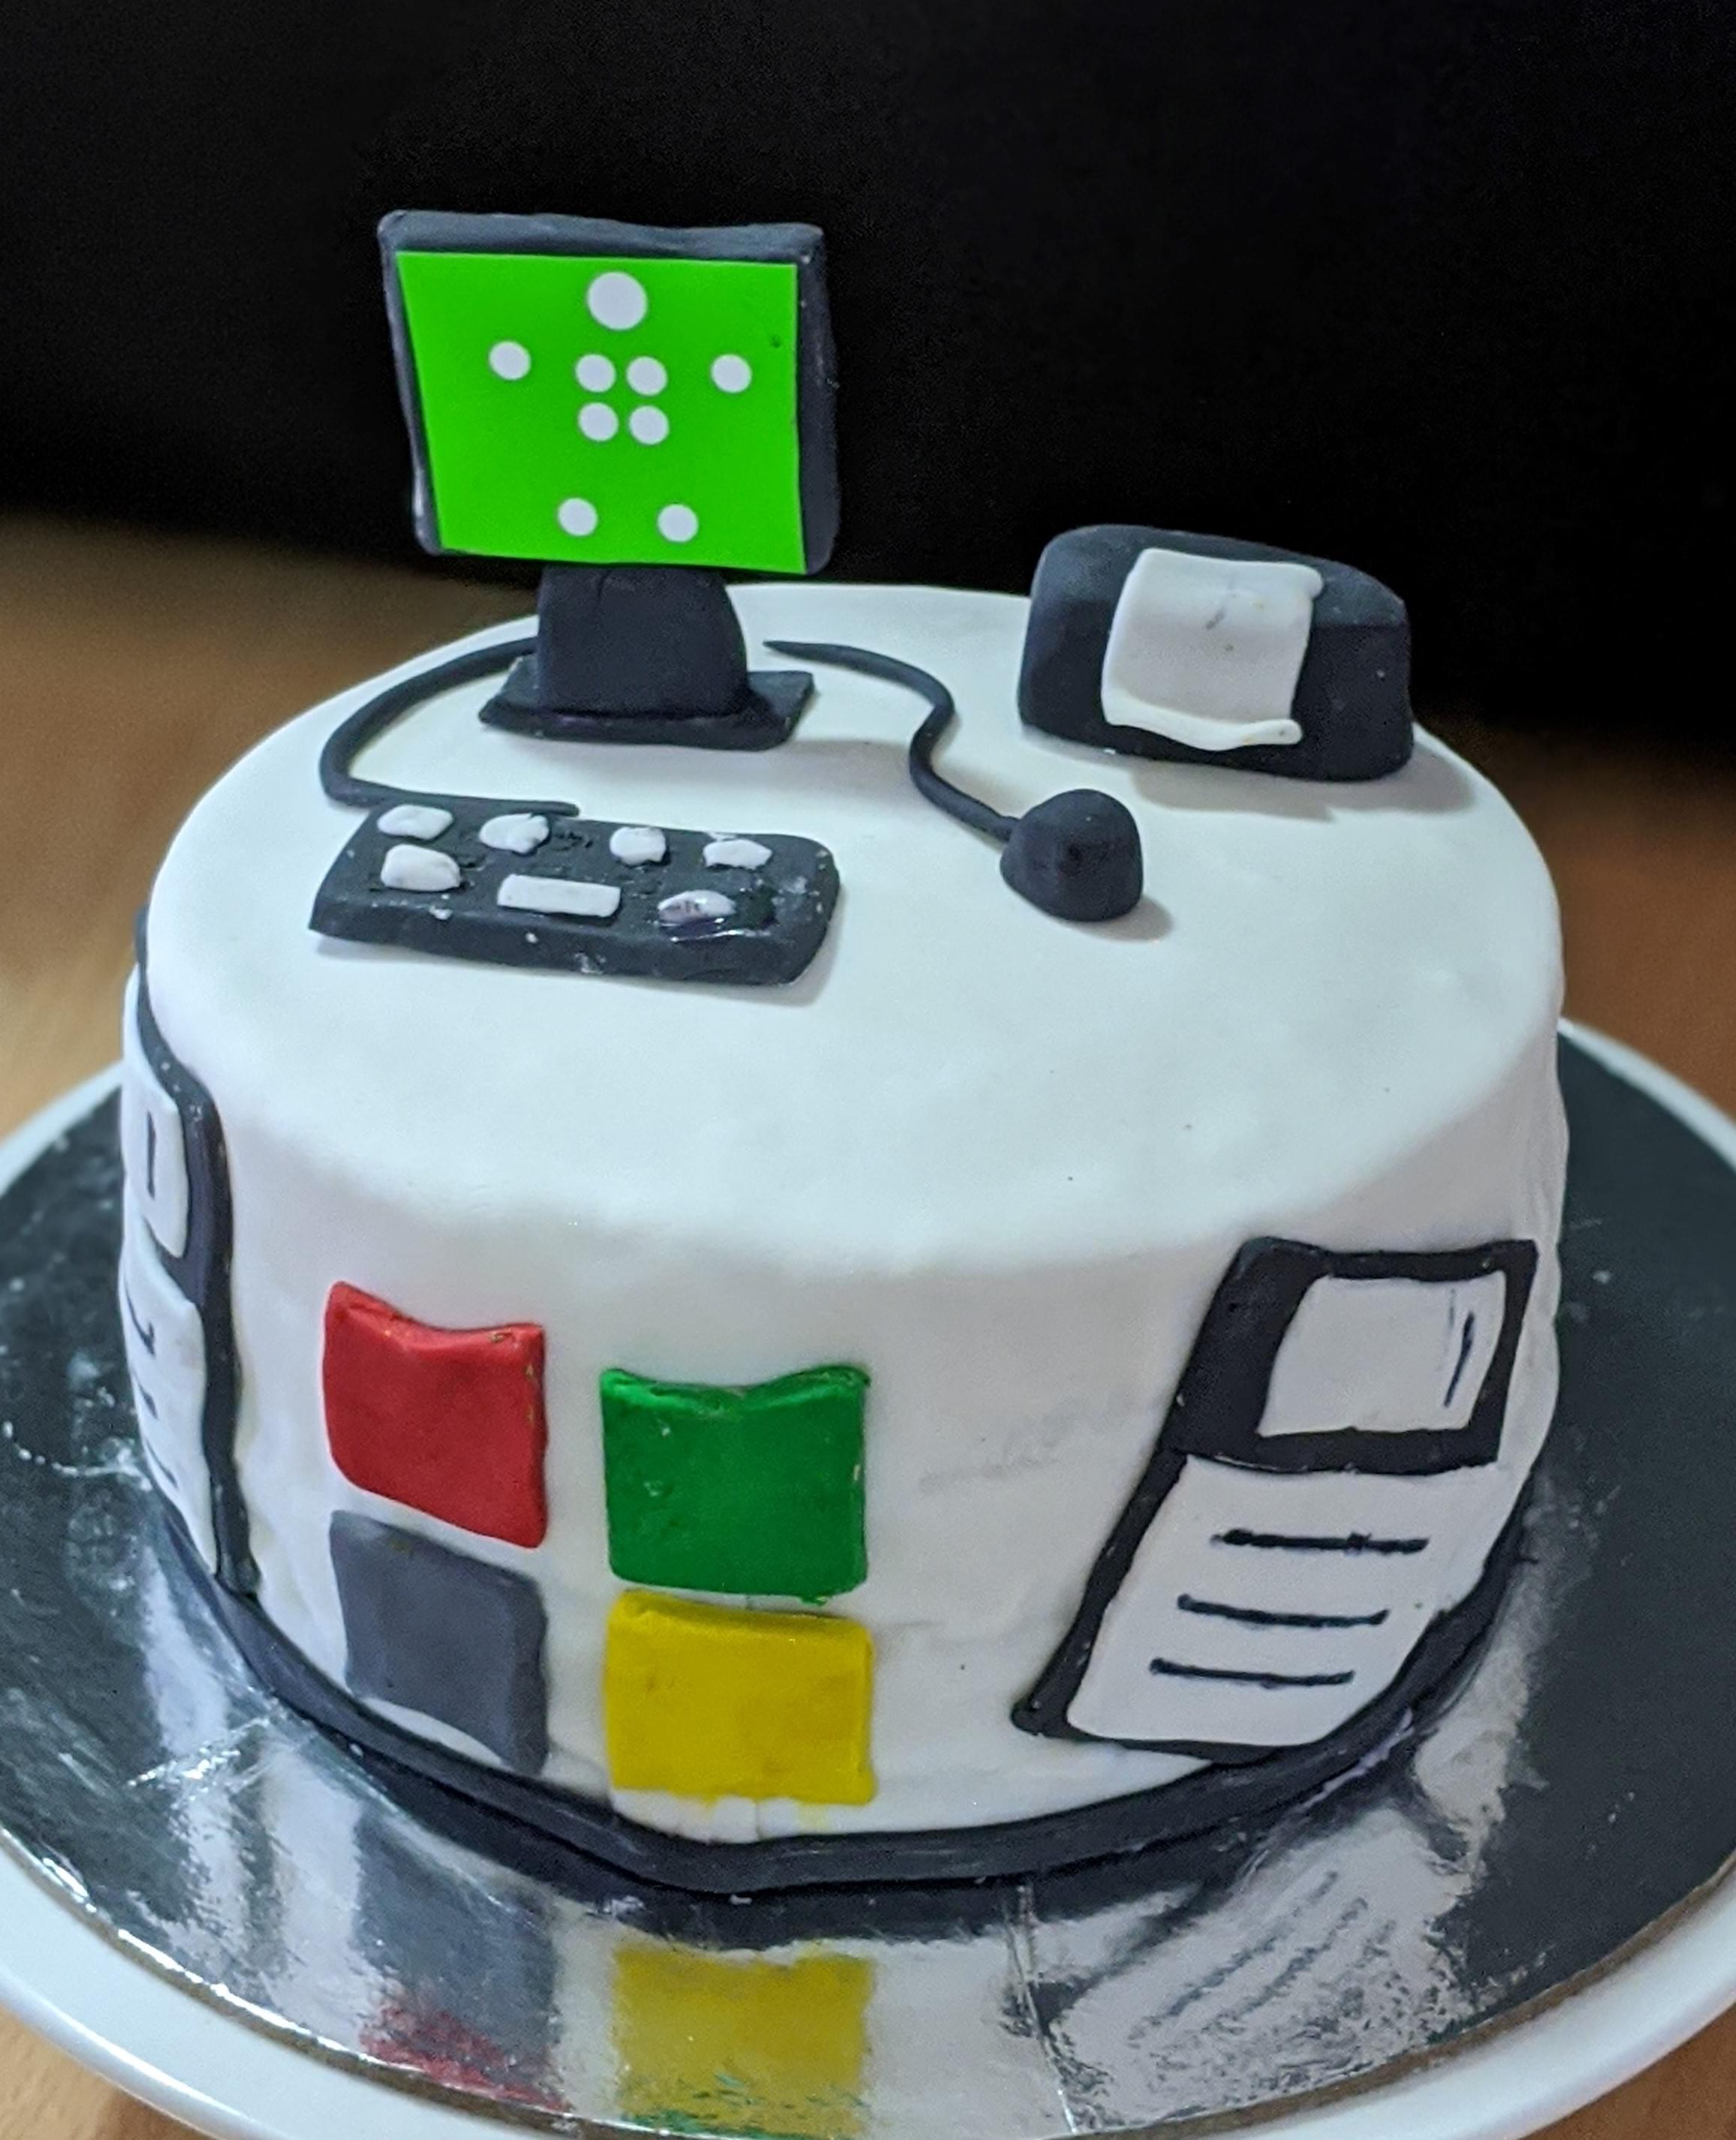 Programmer's birthday cake. - 9GAG